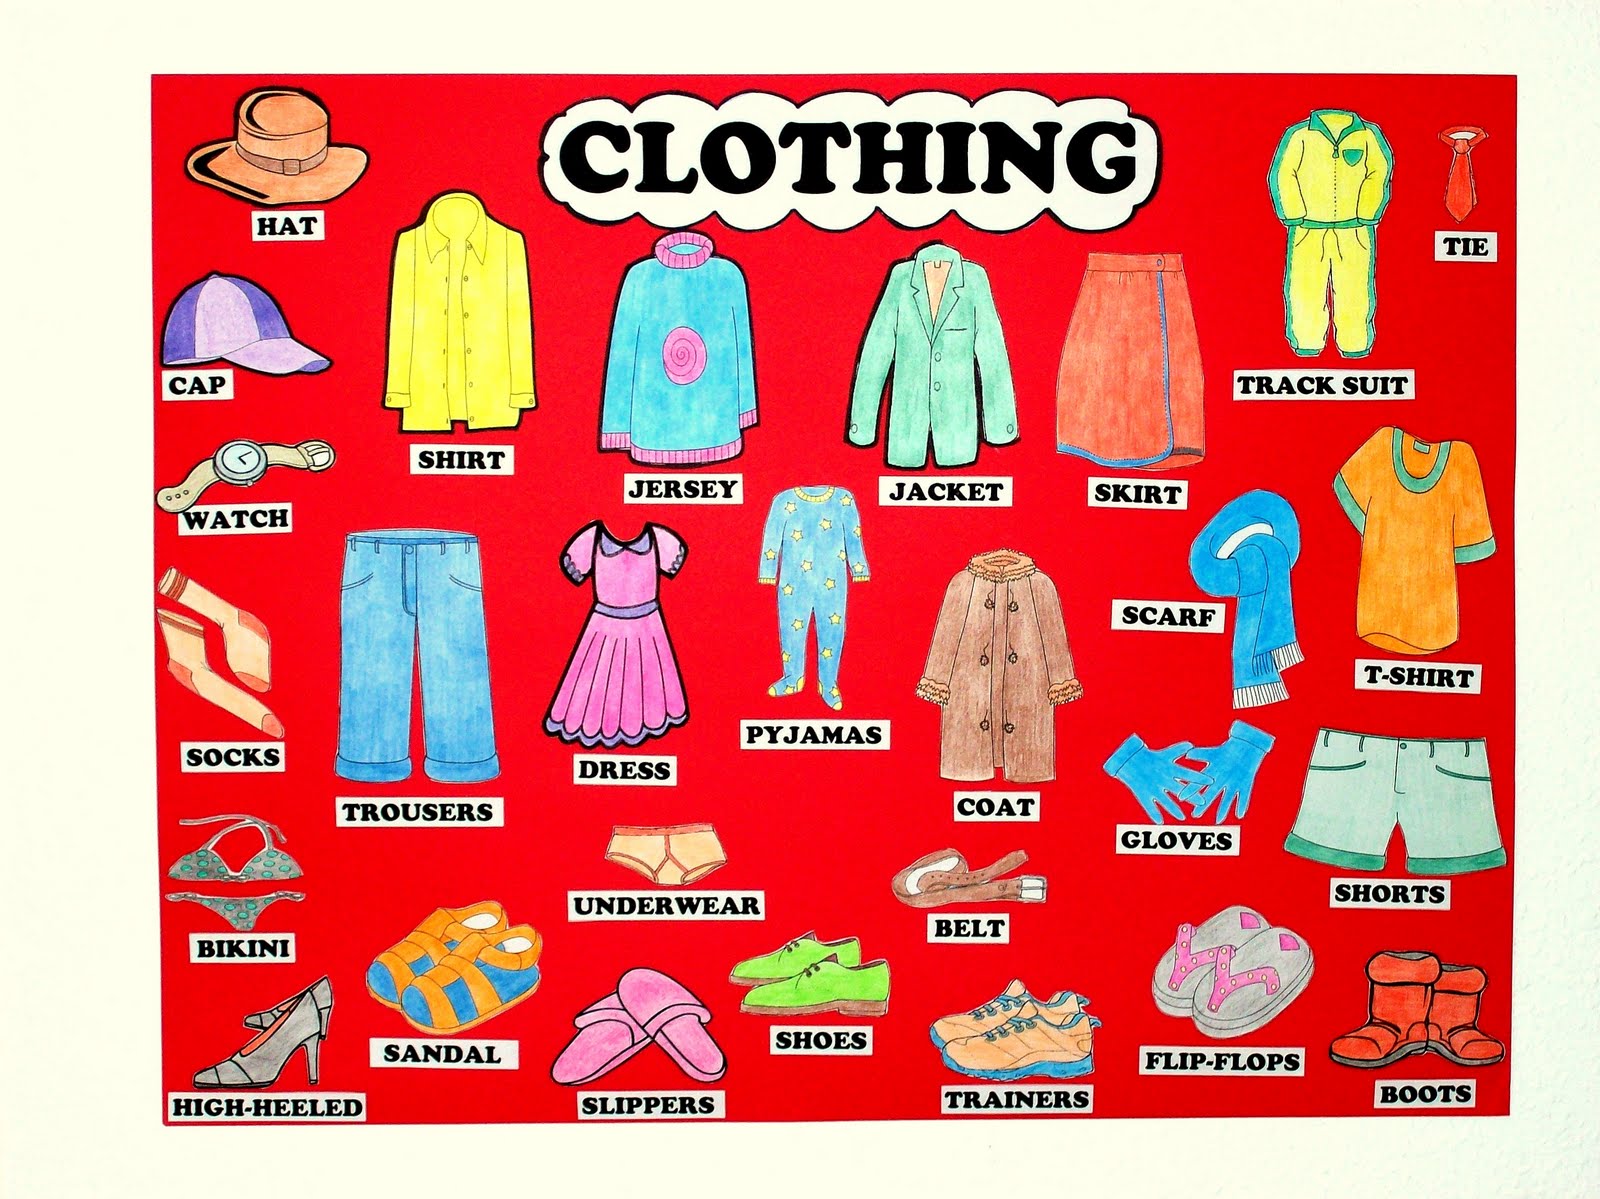 Unit 1: Clothes Vocabulary –